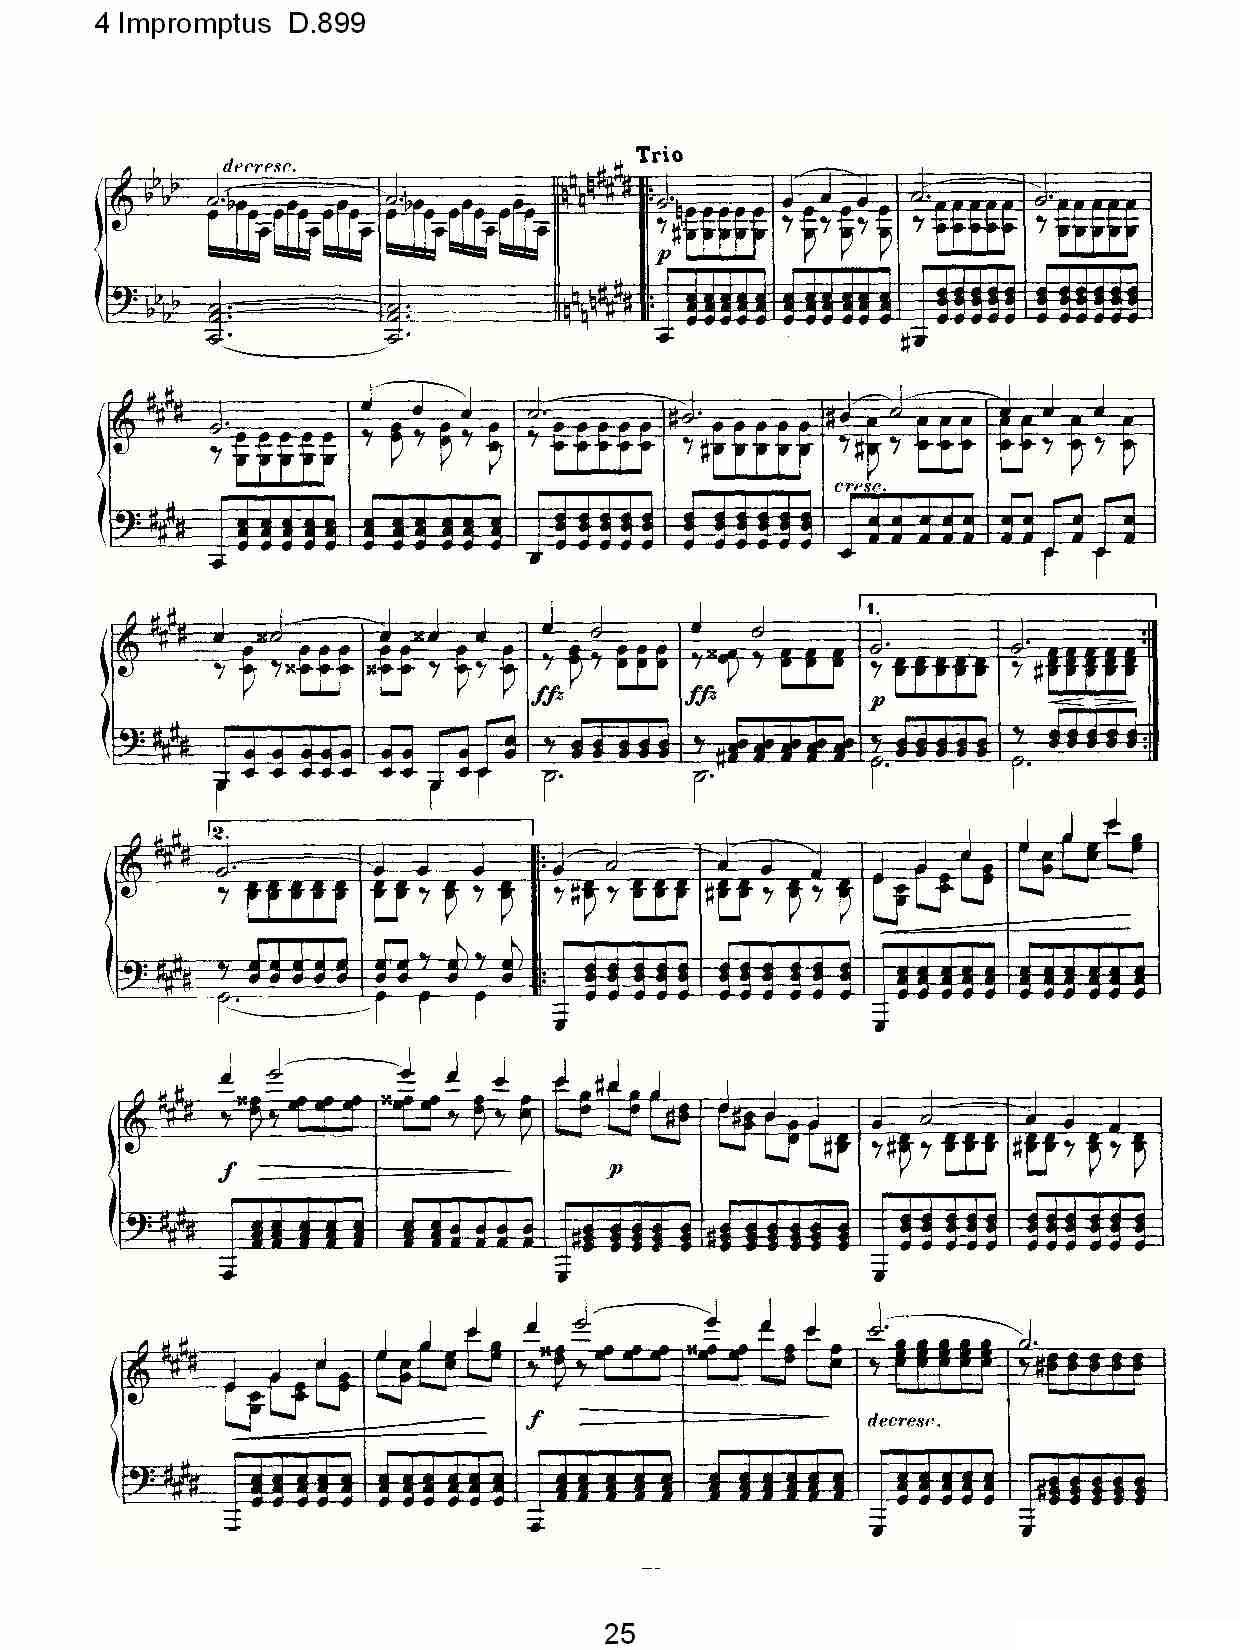 4 Impromptus D.899（4人即兴演奏 D.899）钢琴曲谱（图25）